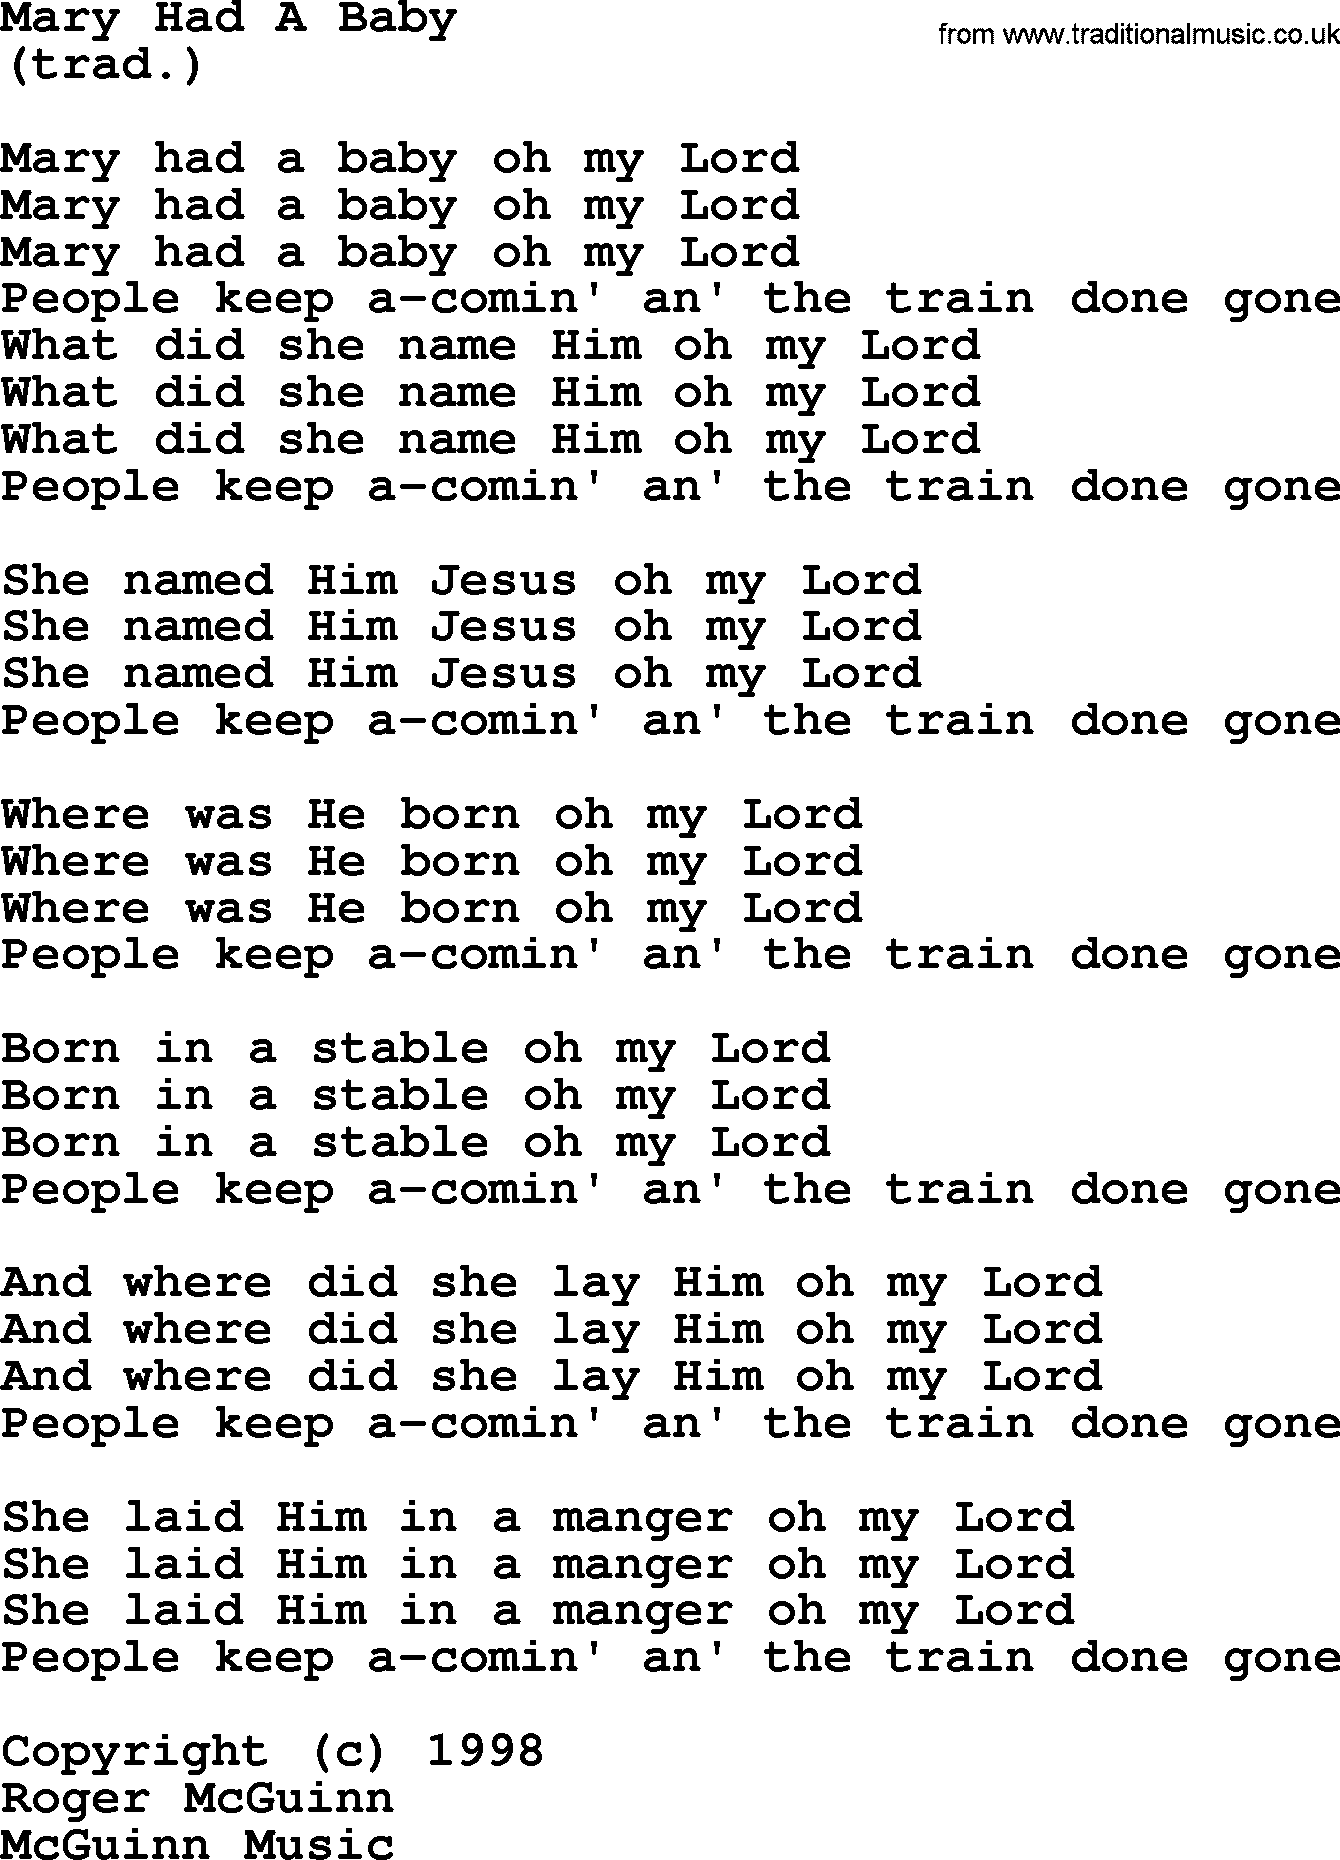 The Byrds song Mary Had A Baby, lyrics